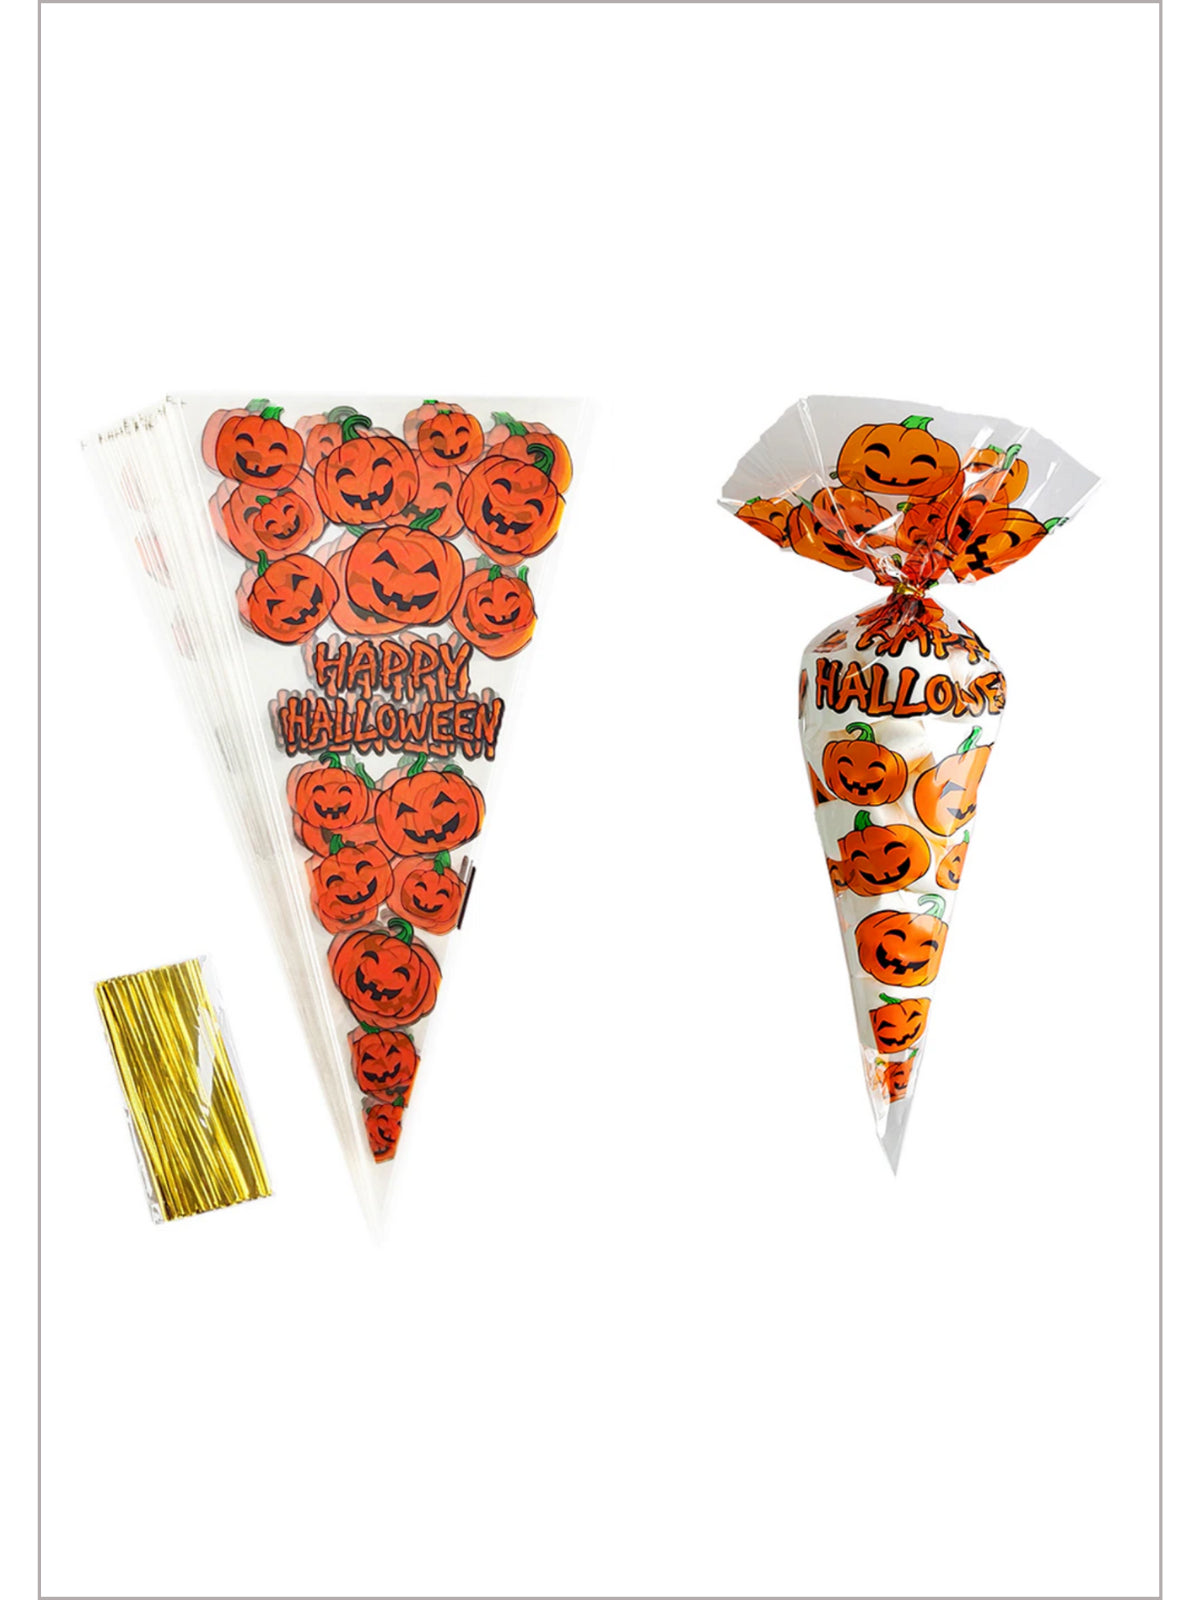 Mia Belle Girls | Halloween Candy Cone Bags | Halloween Accessories